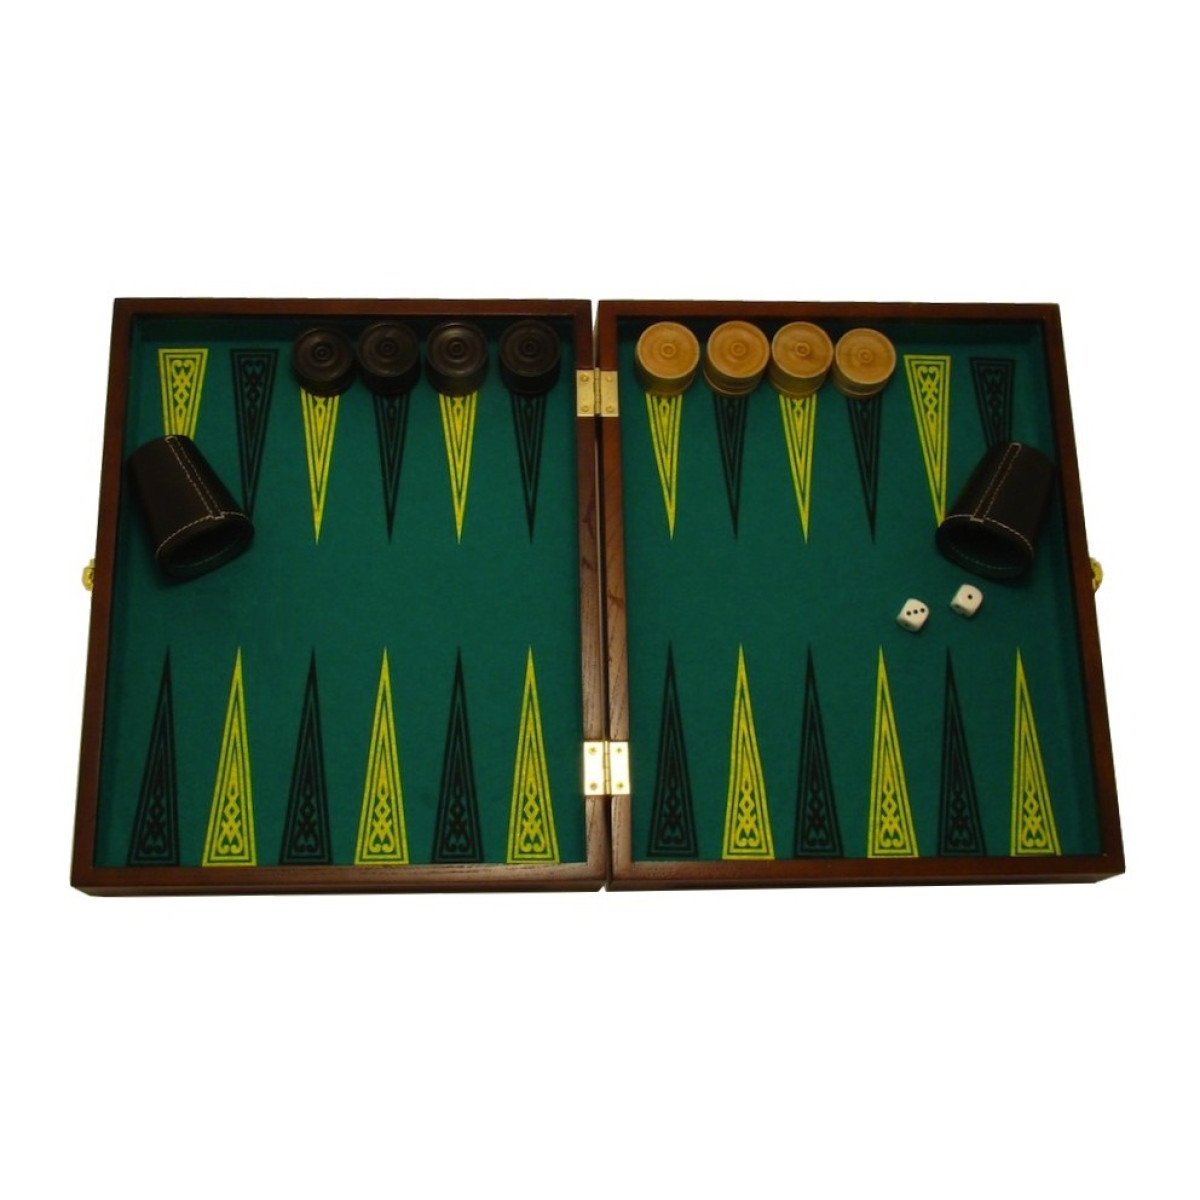 Won weduwnaar Dwars zitten Jacquetbak / Backgammon massieve eik kopen op Amusement.be